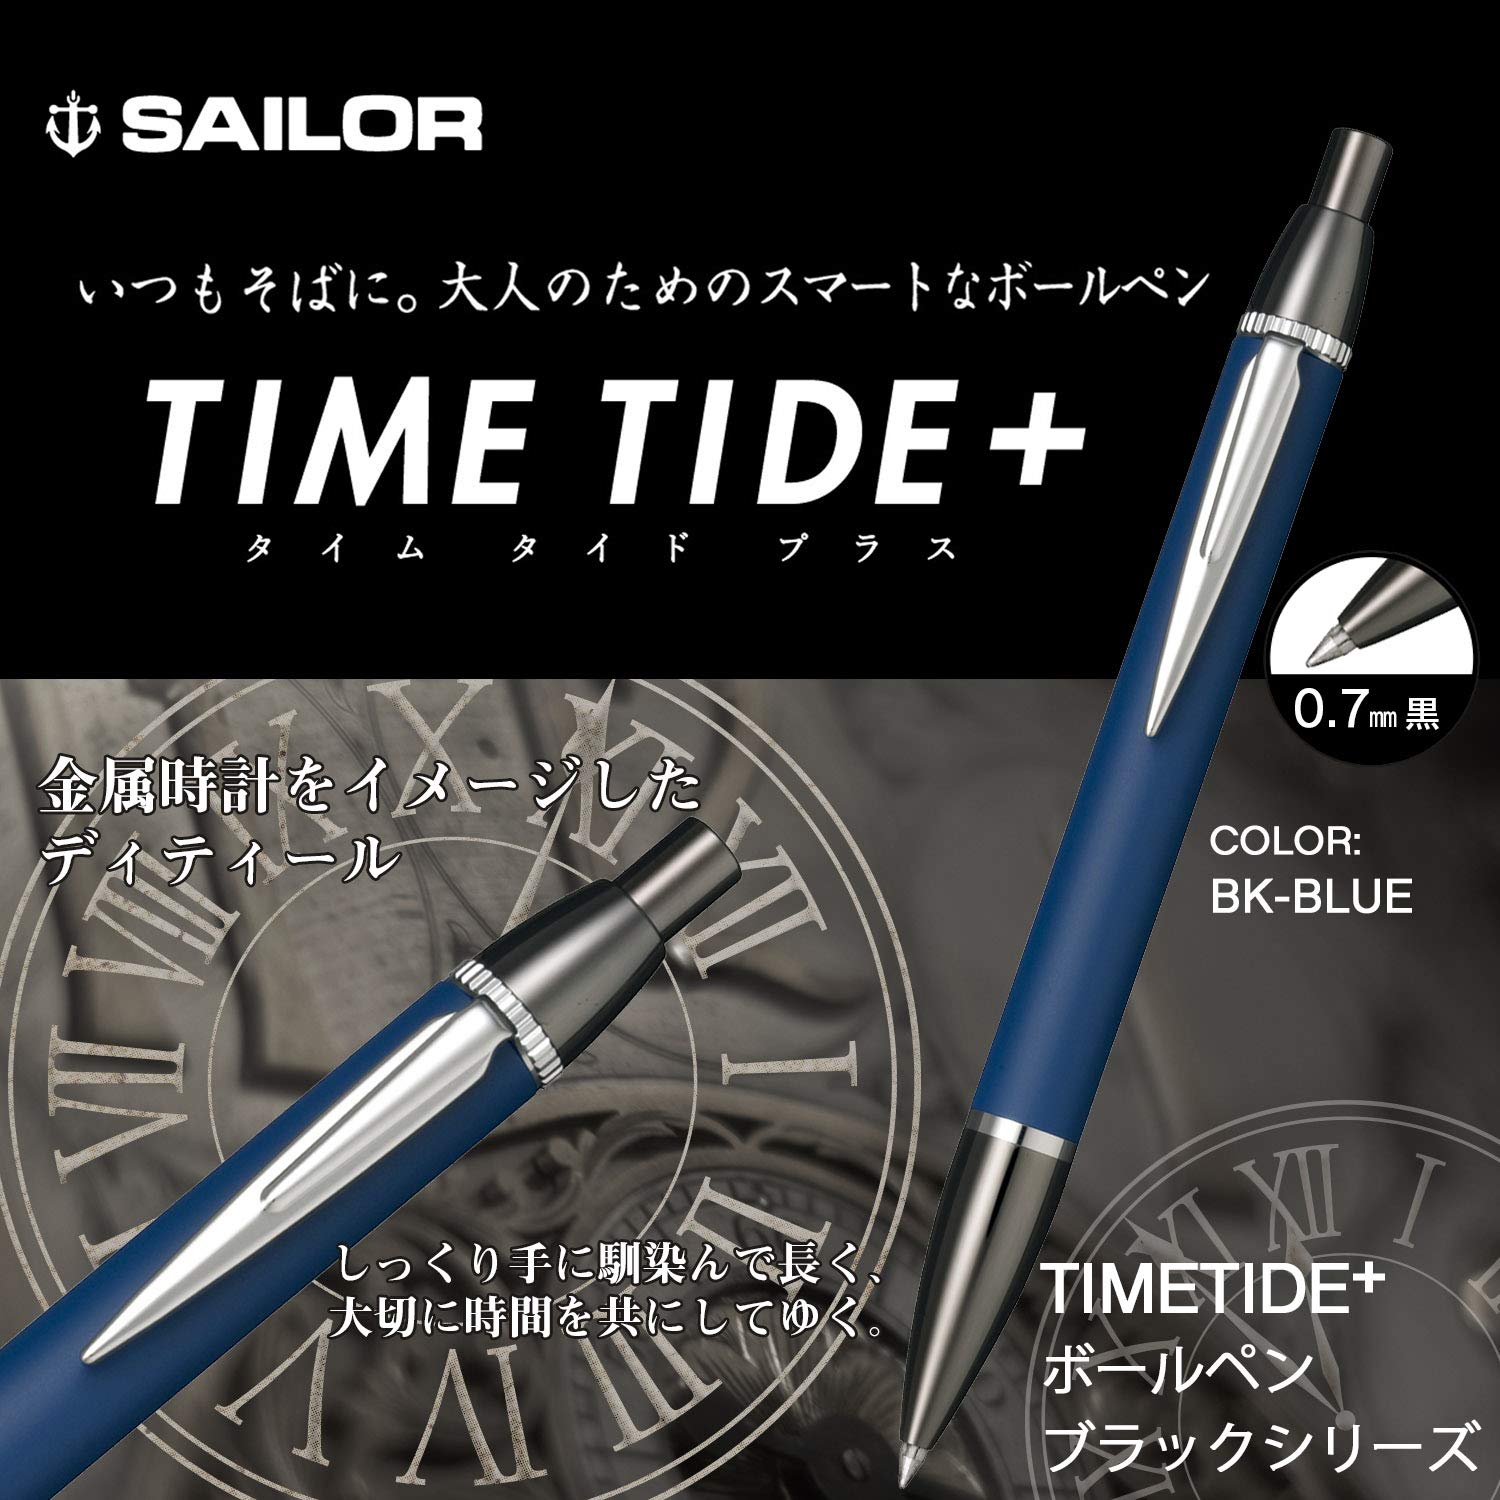 Sailor Fountain Pen Time Tide Plus Multifunctional Black X Blue Model 17-0360-040